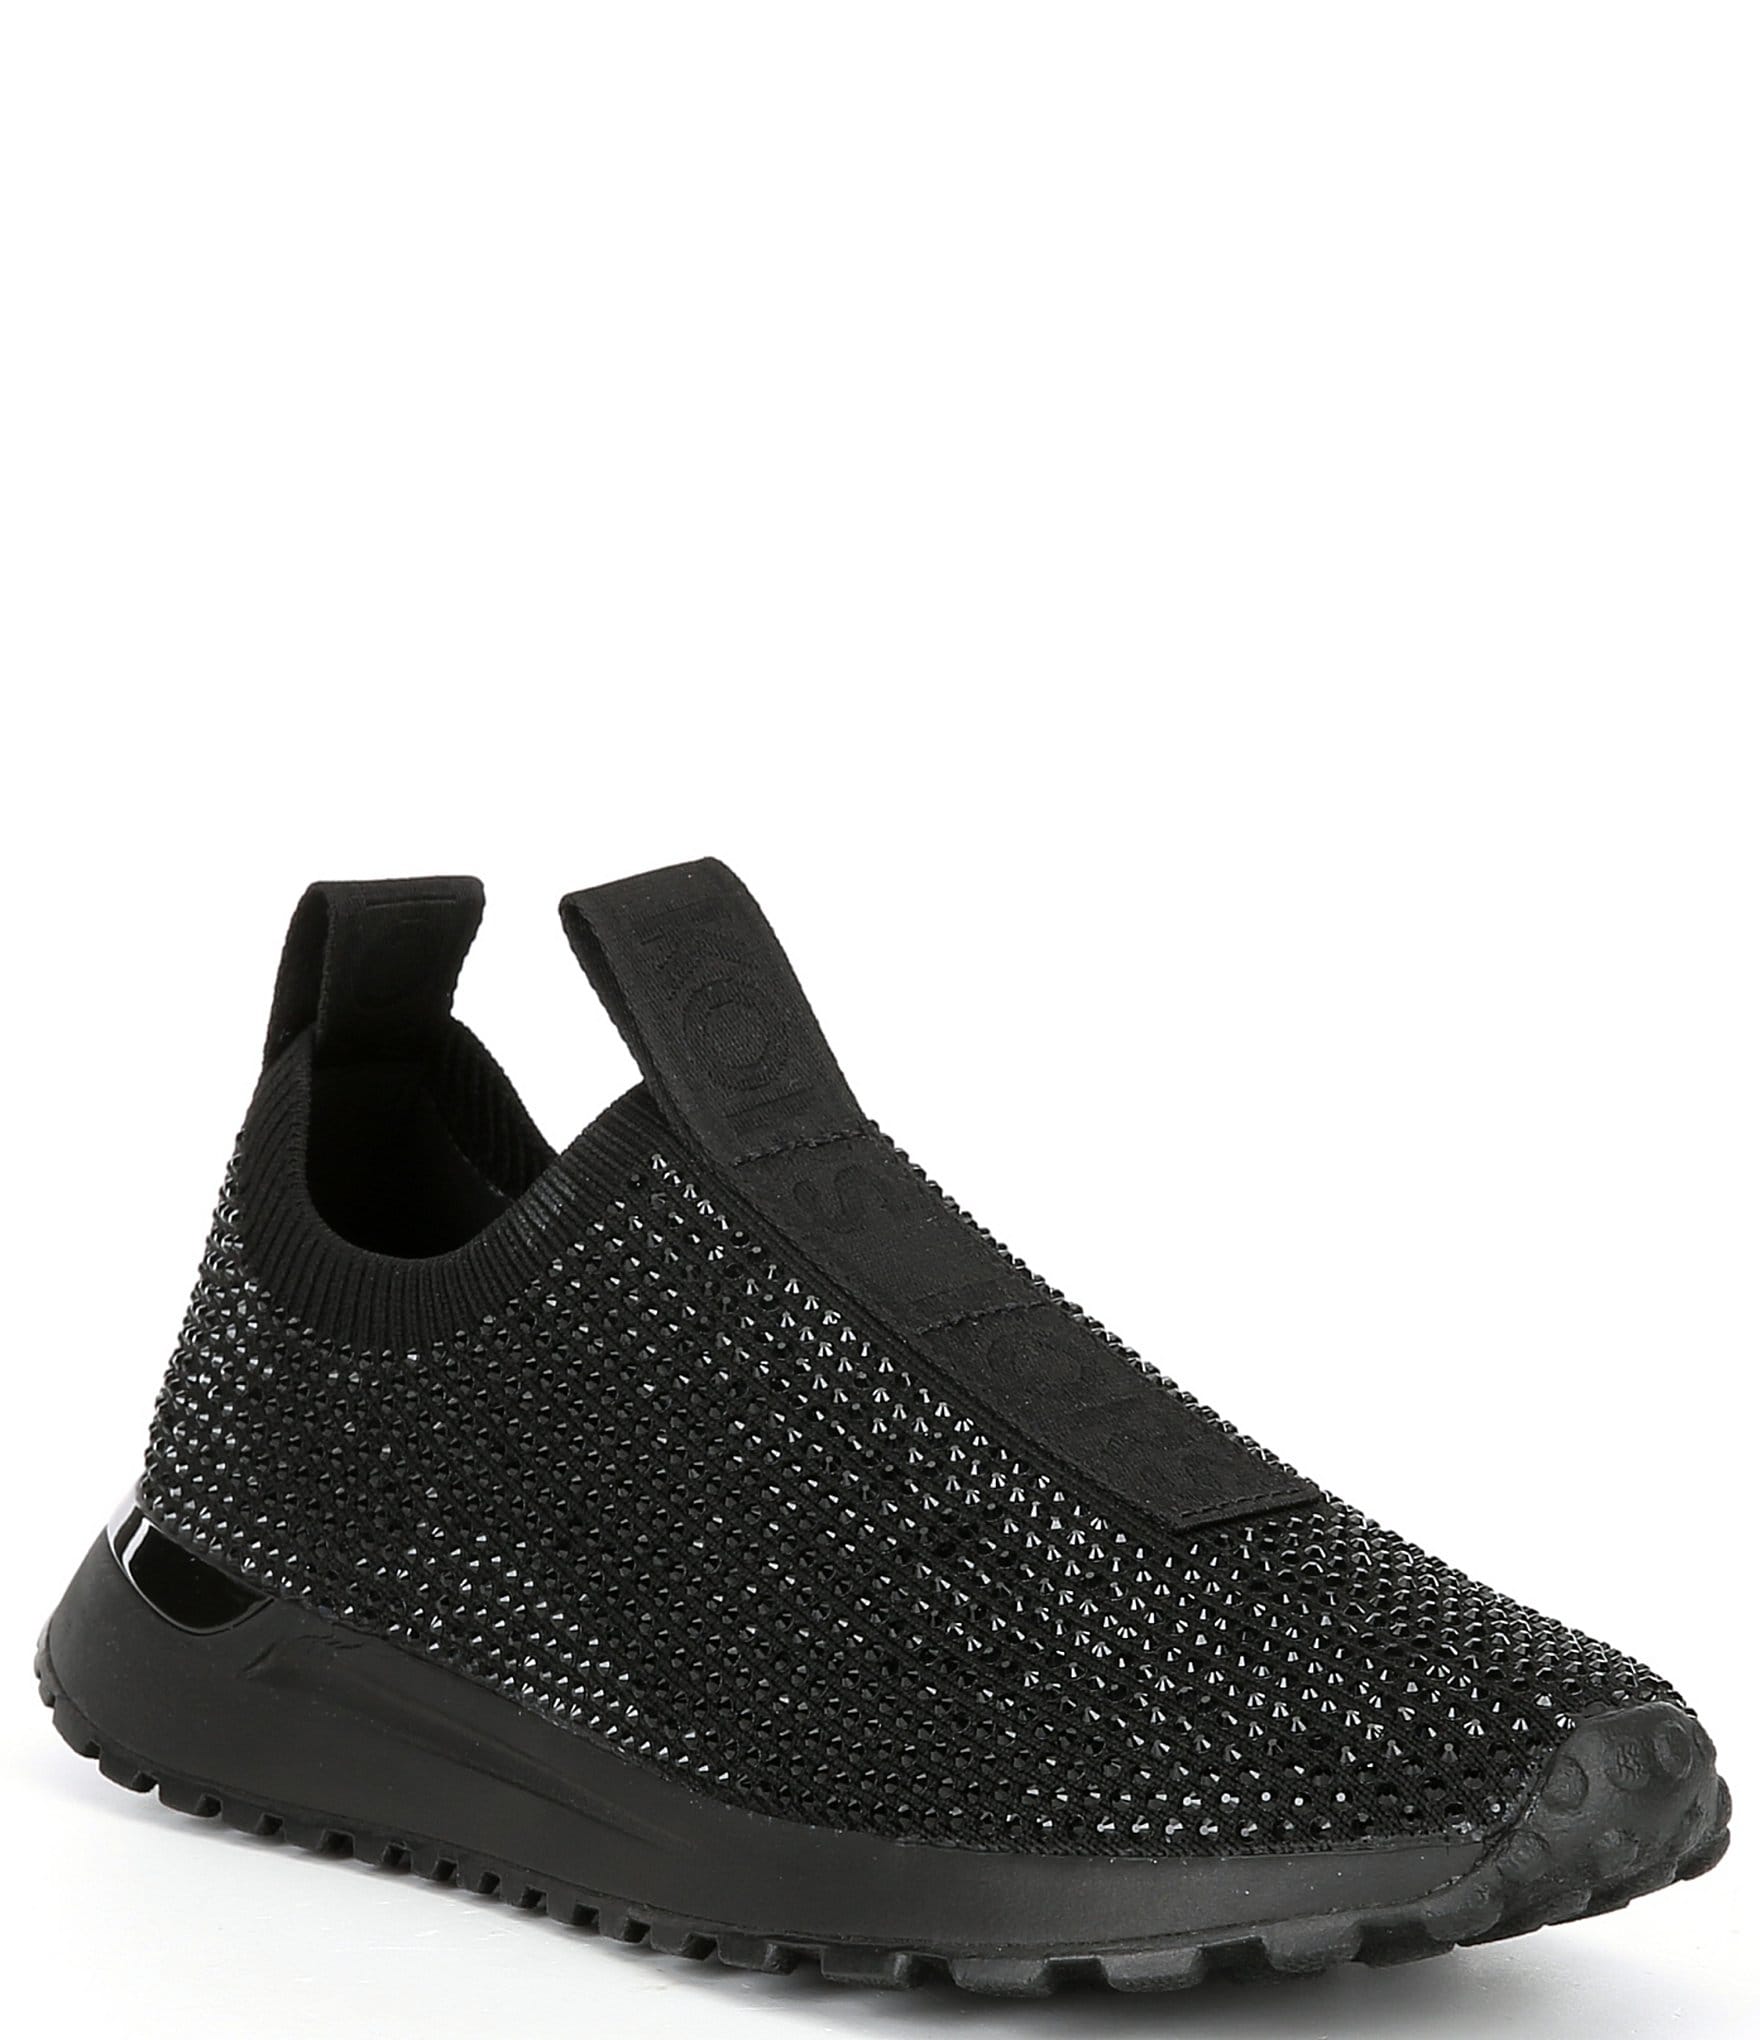 MICHAEL KORS: Bodie stretch knit sneakers - Black  Michael Kors sneakers  43H3BDFP1D online at